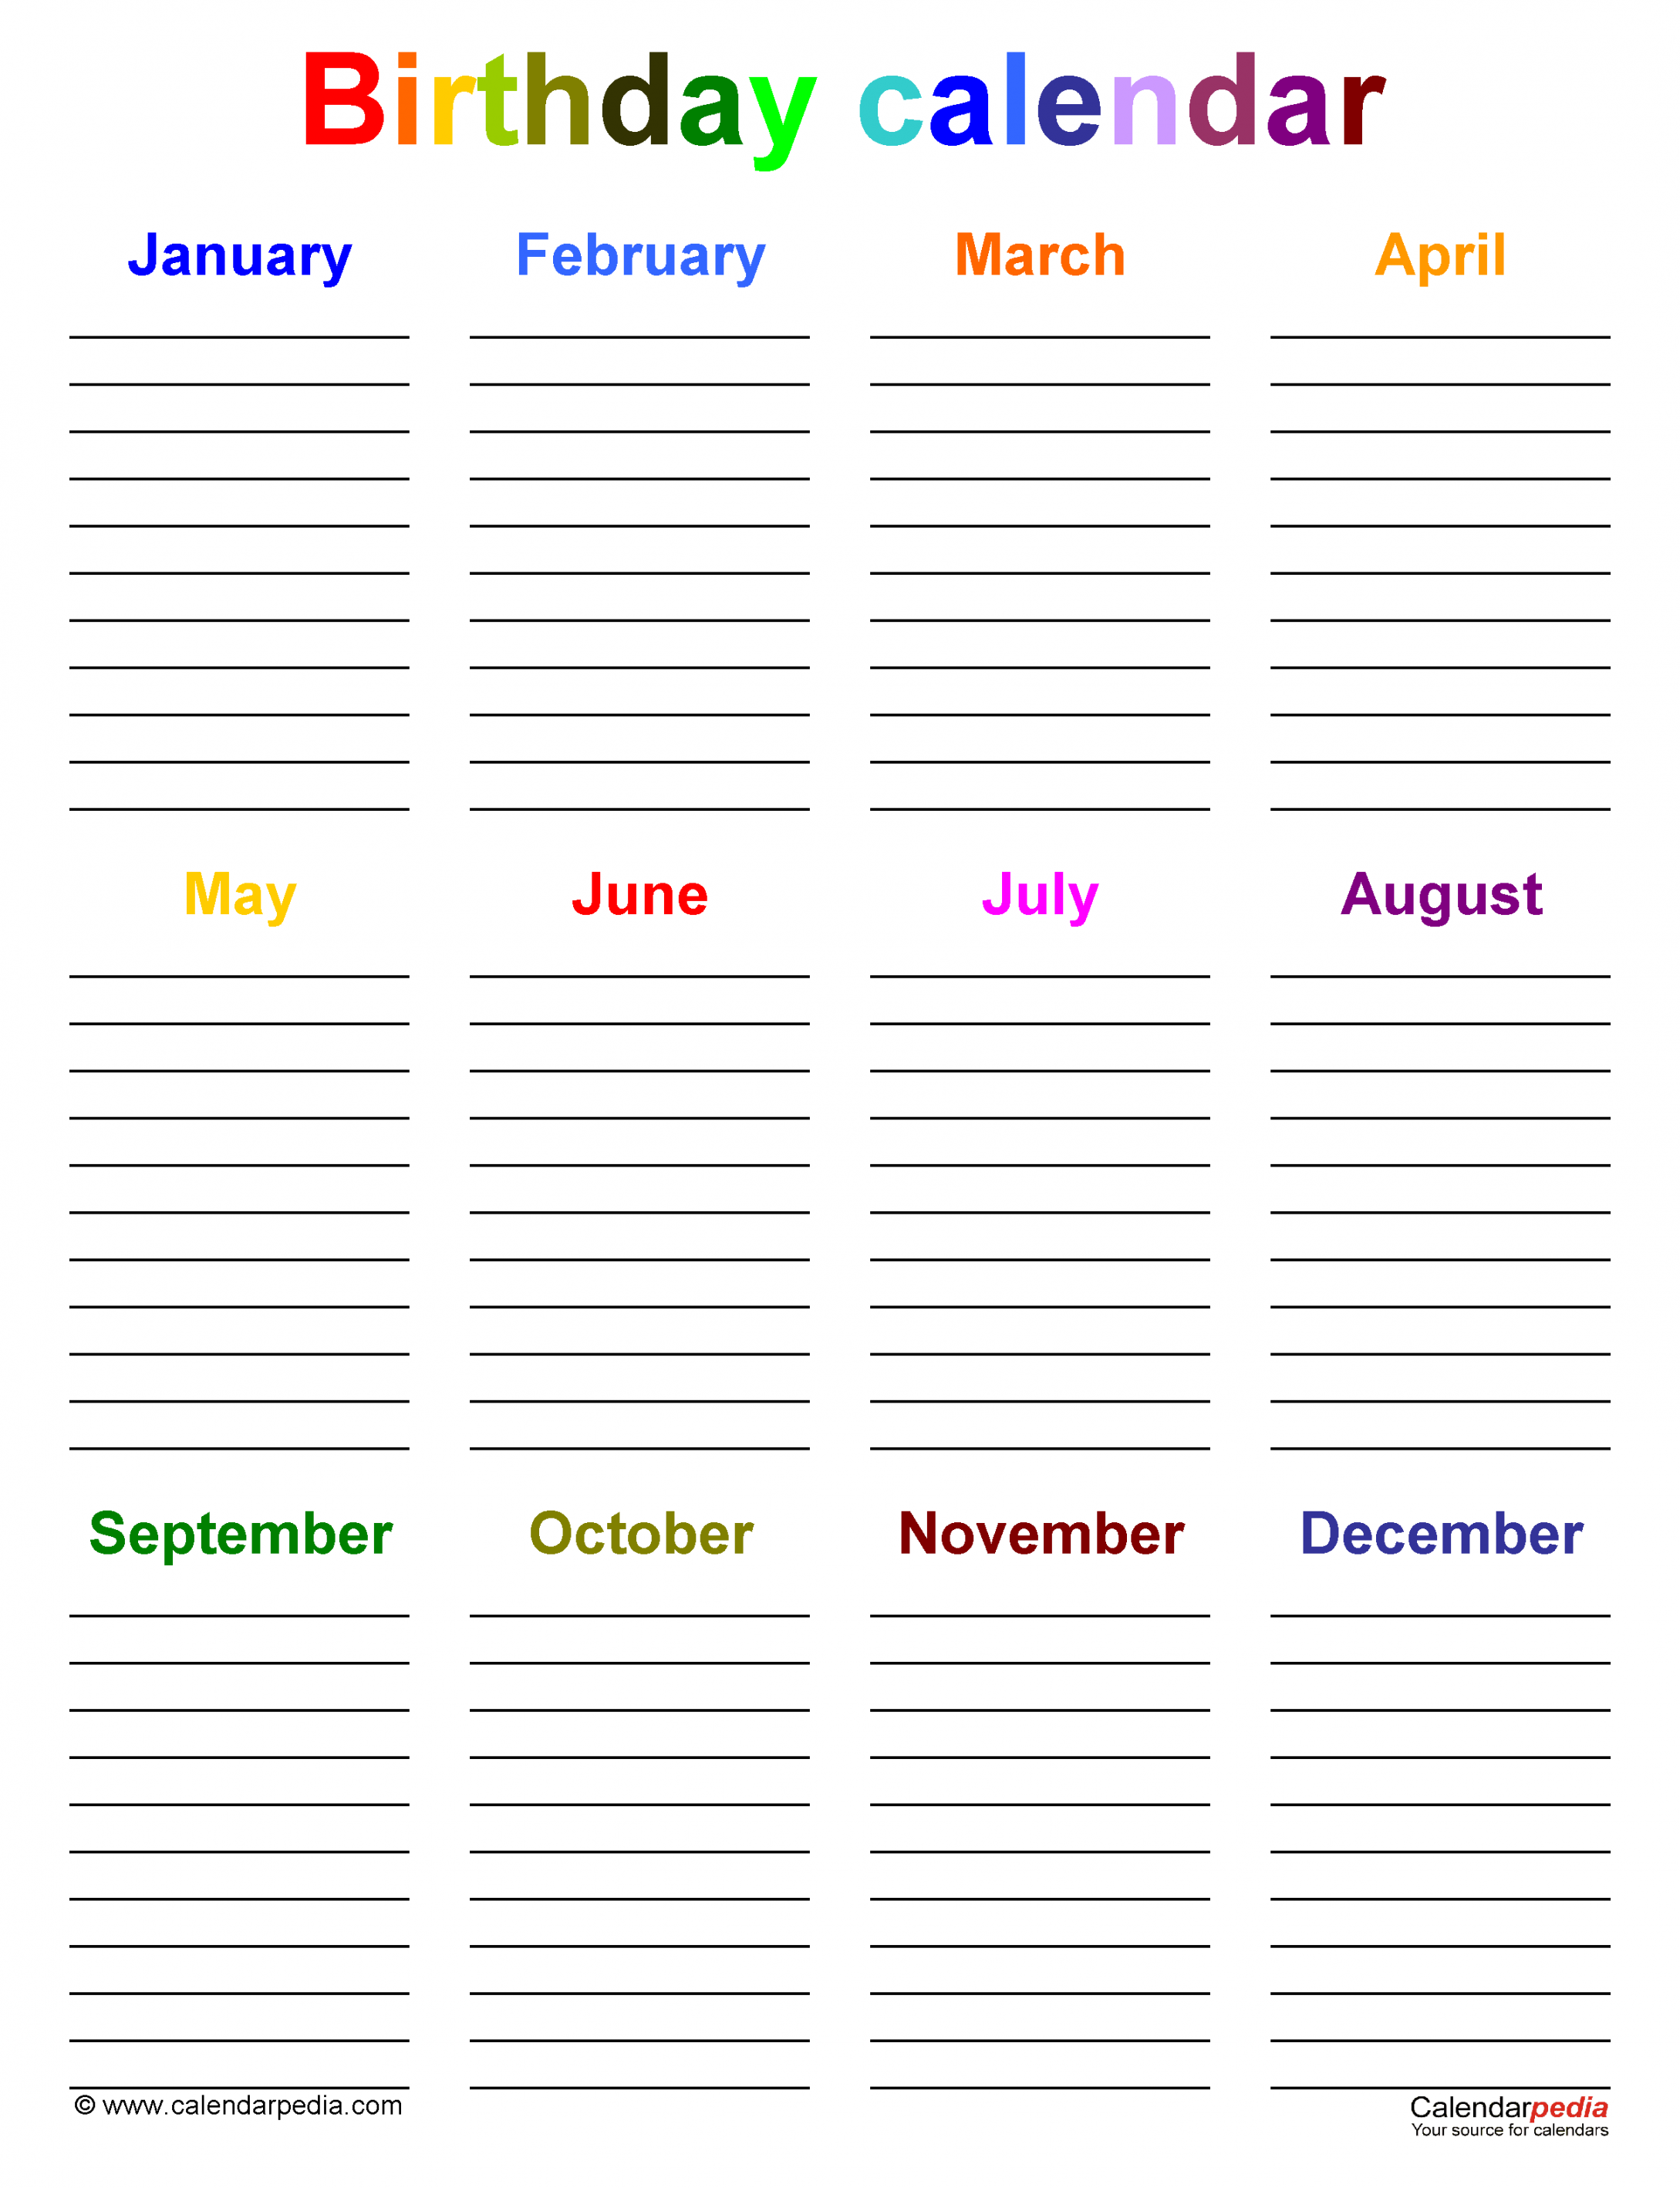 Birthday calendars - Free Printable PDF templates - FREE Printables - Free Printable Birthday Calendar